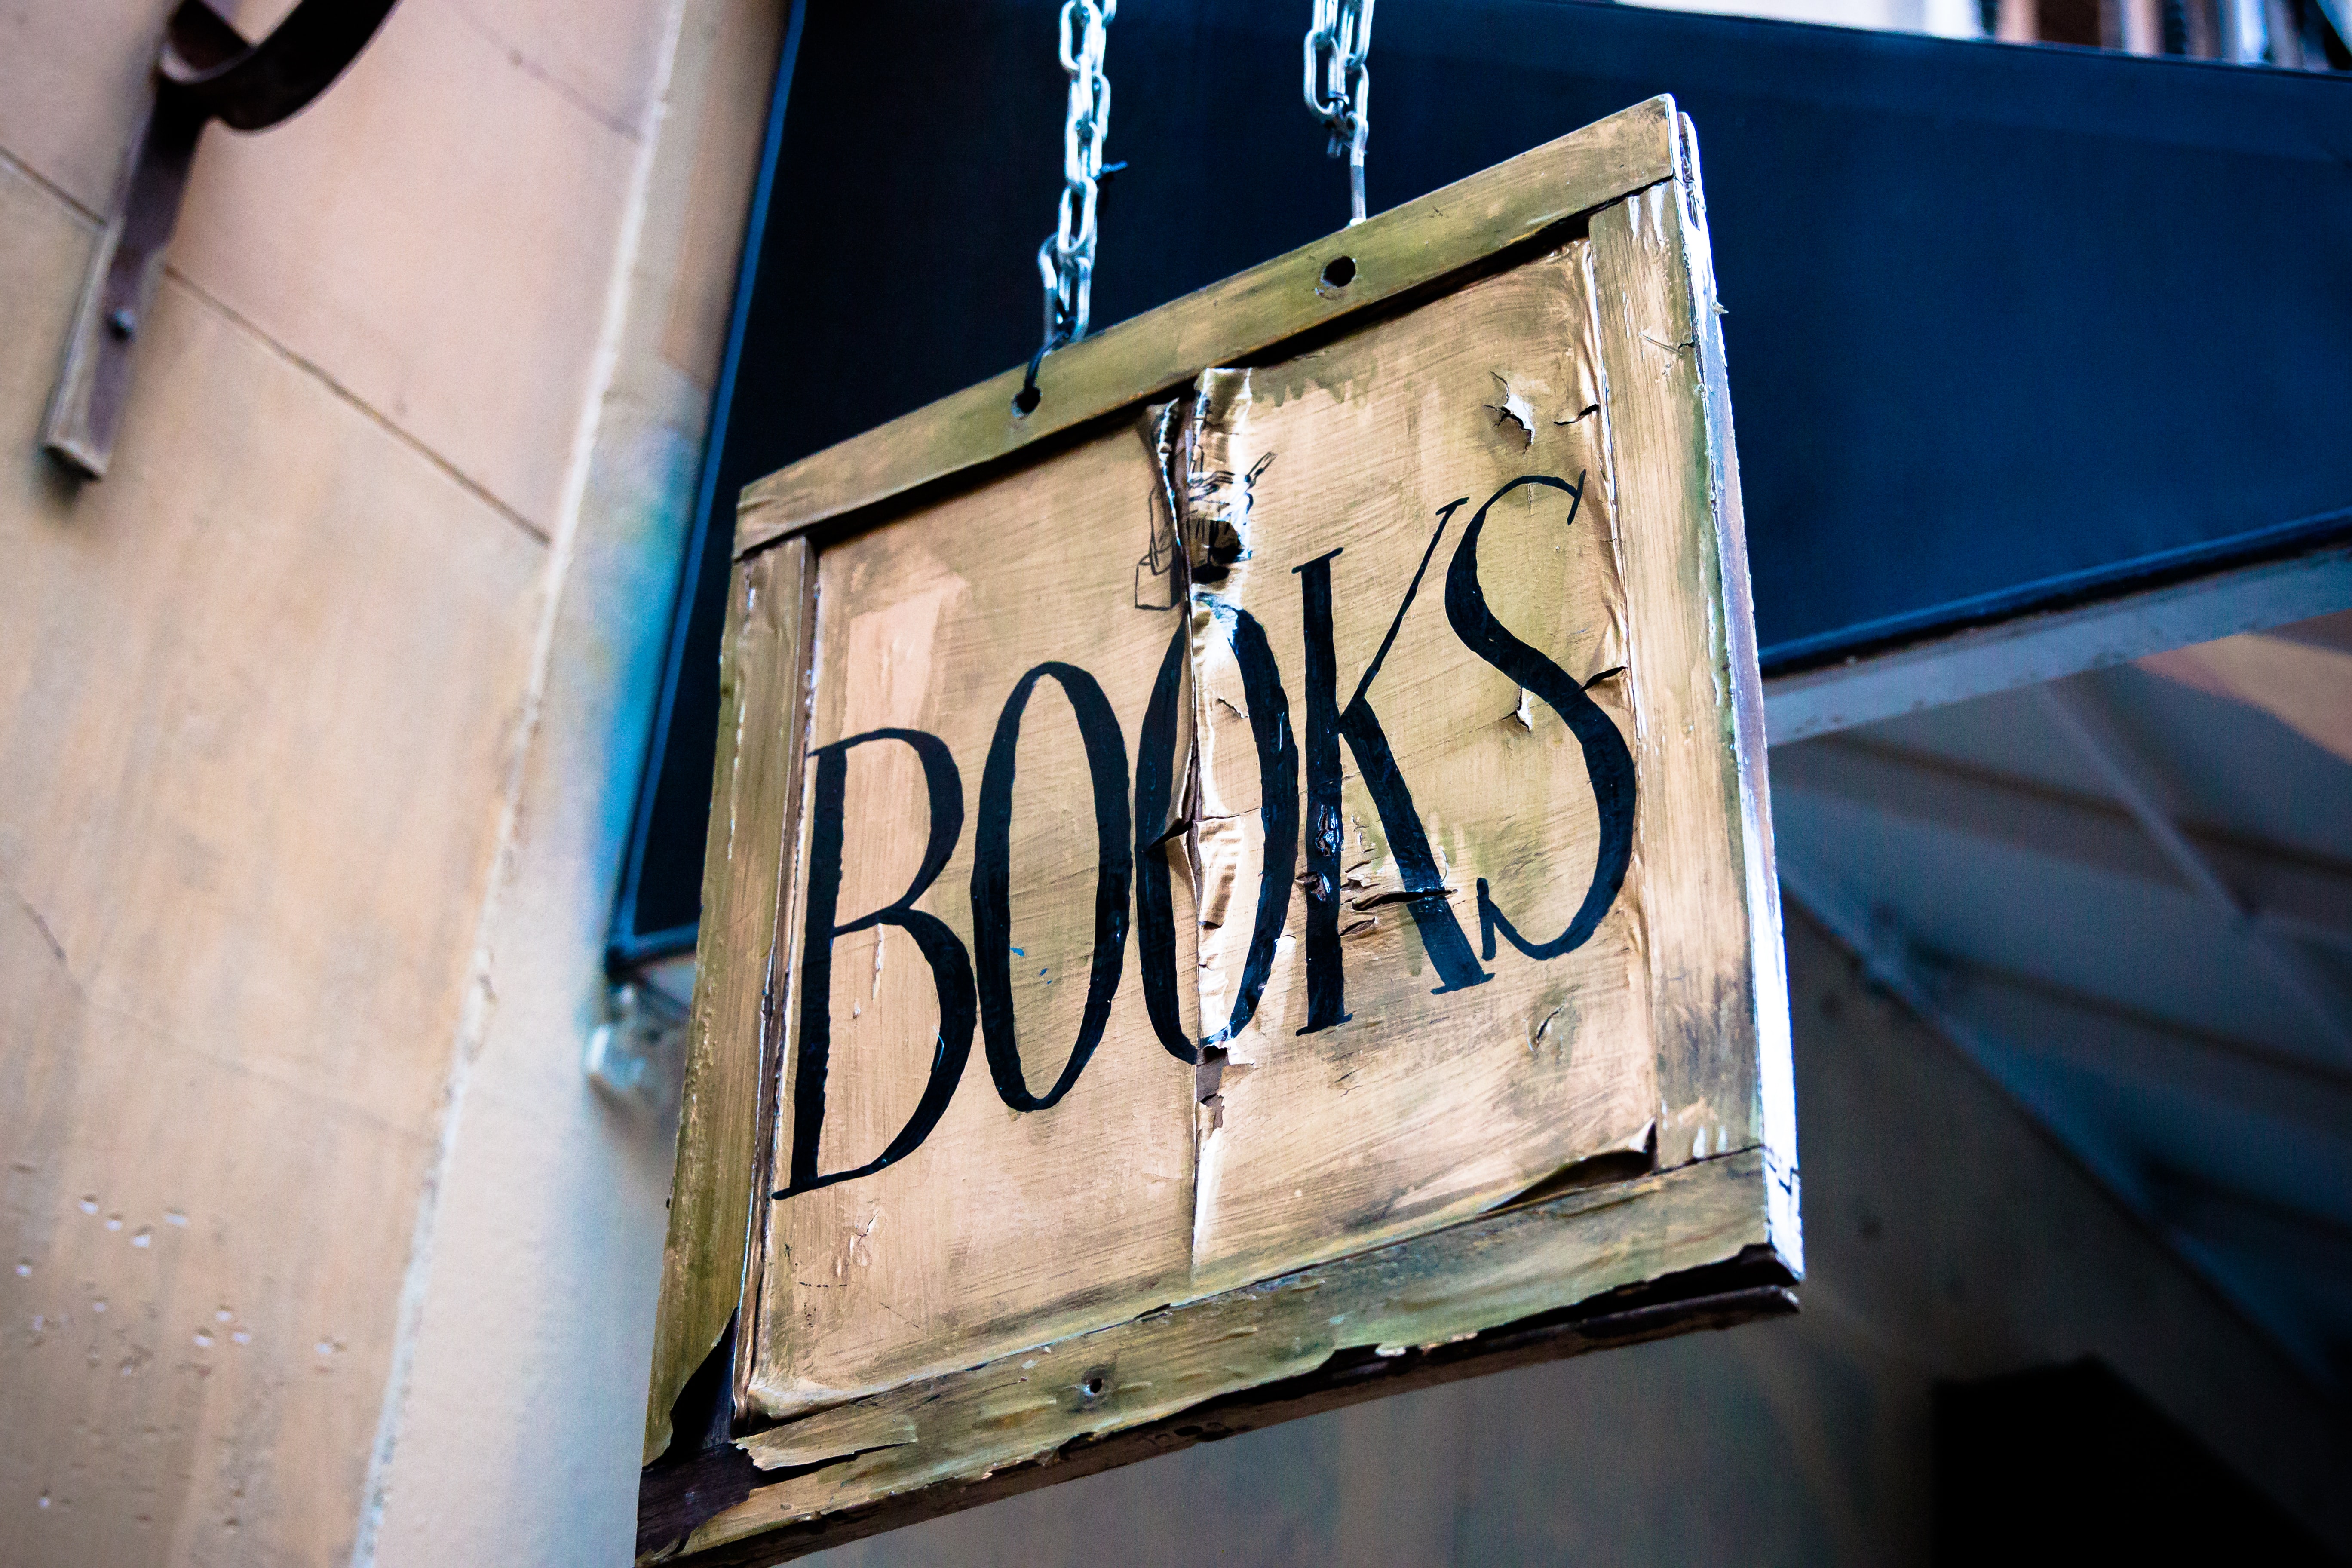 Bookshop sign